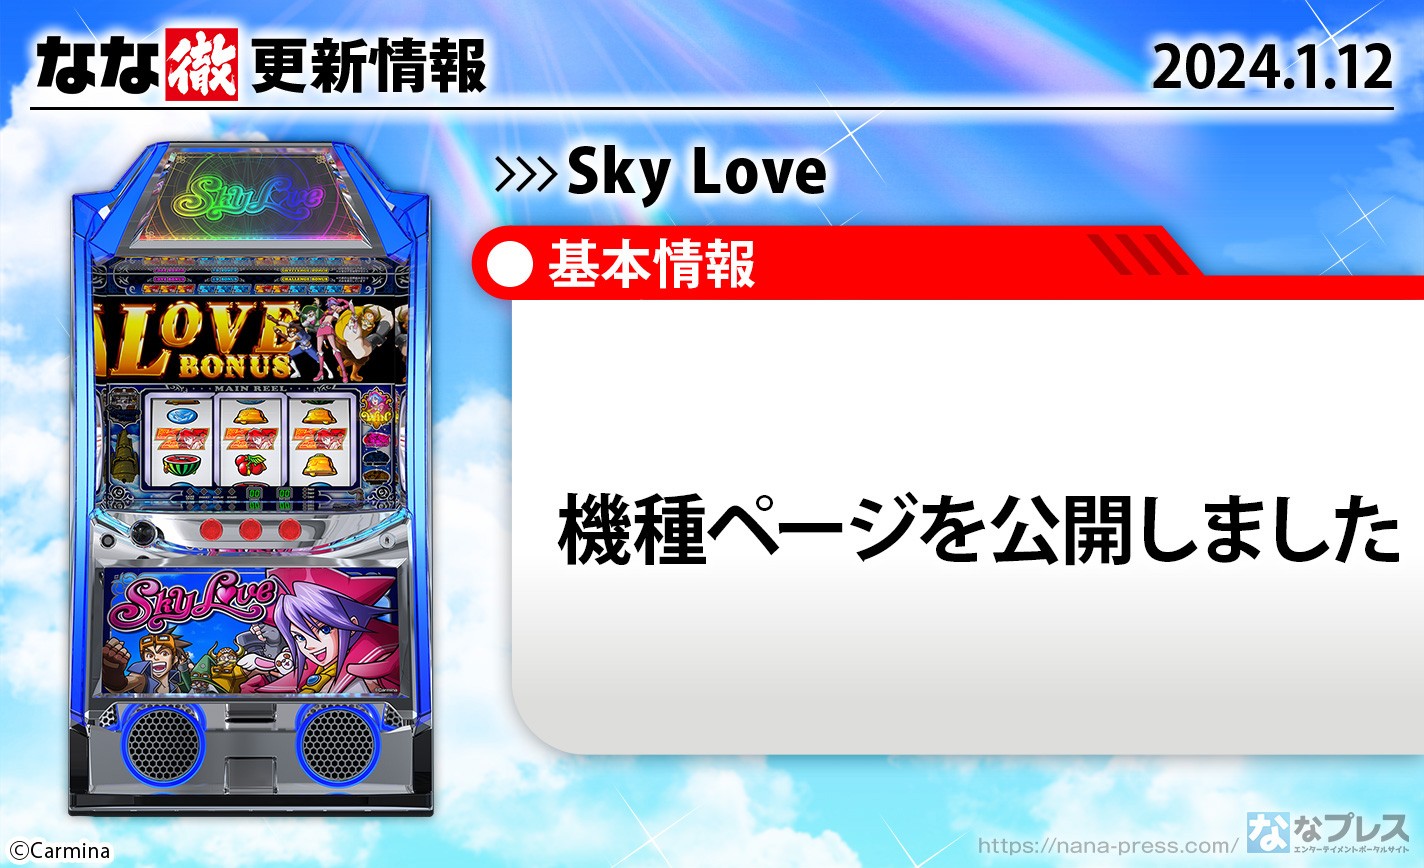 【Sky Love】機種ページを公開しました。【1月12日解析情報更新】 eyecatch-image